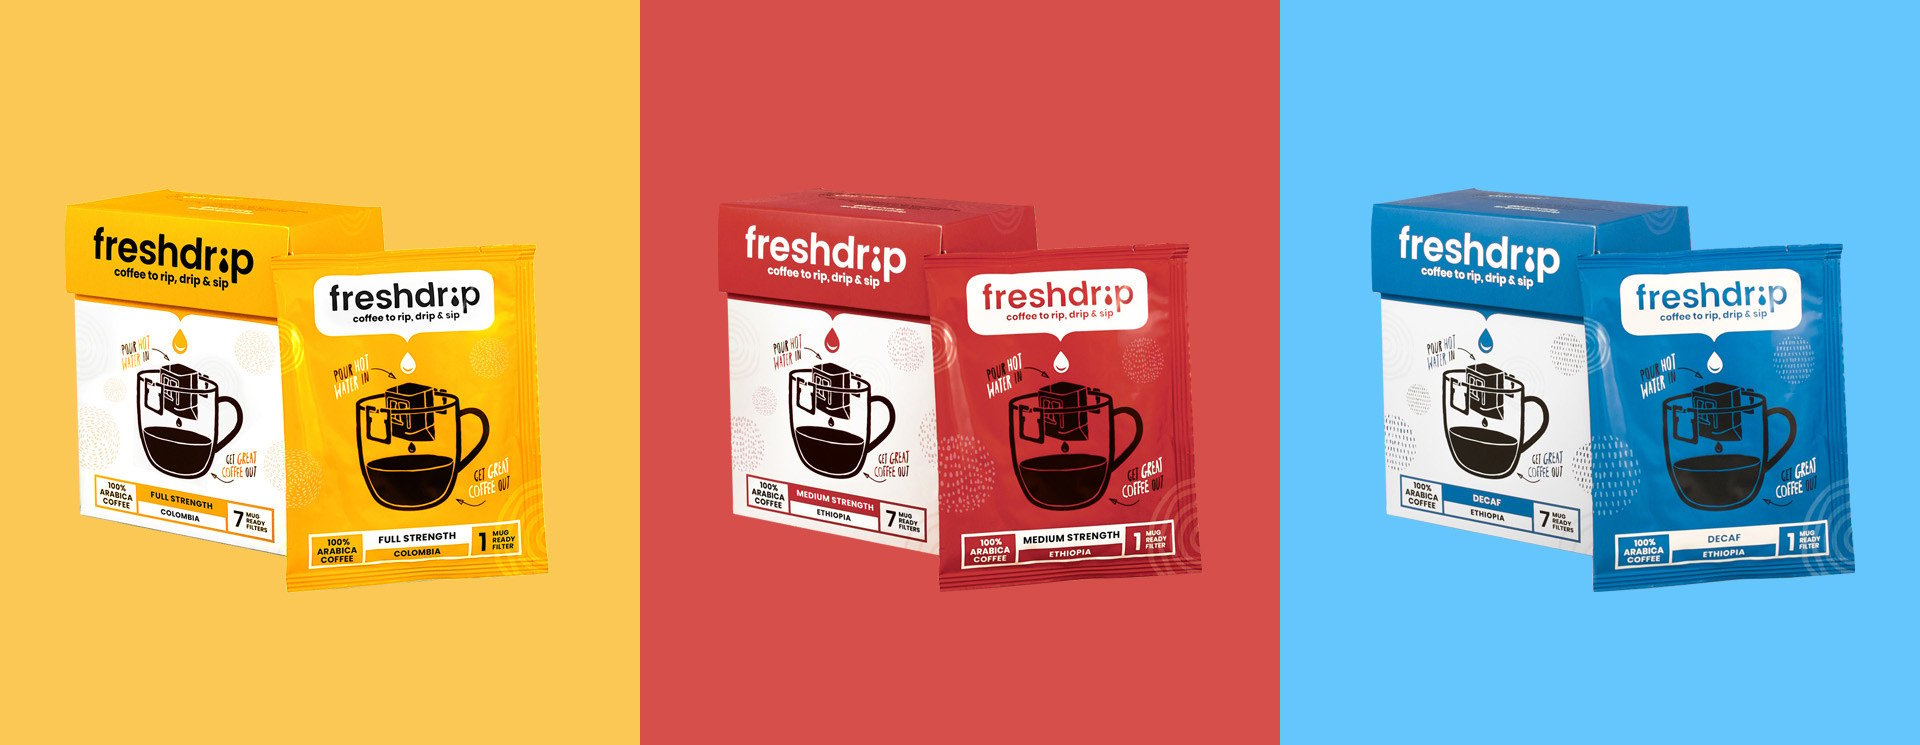 Freshdrip Small Box Met 7 Koffie Filters